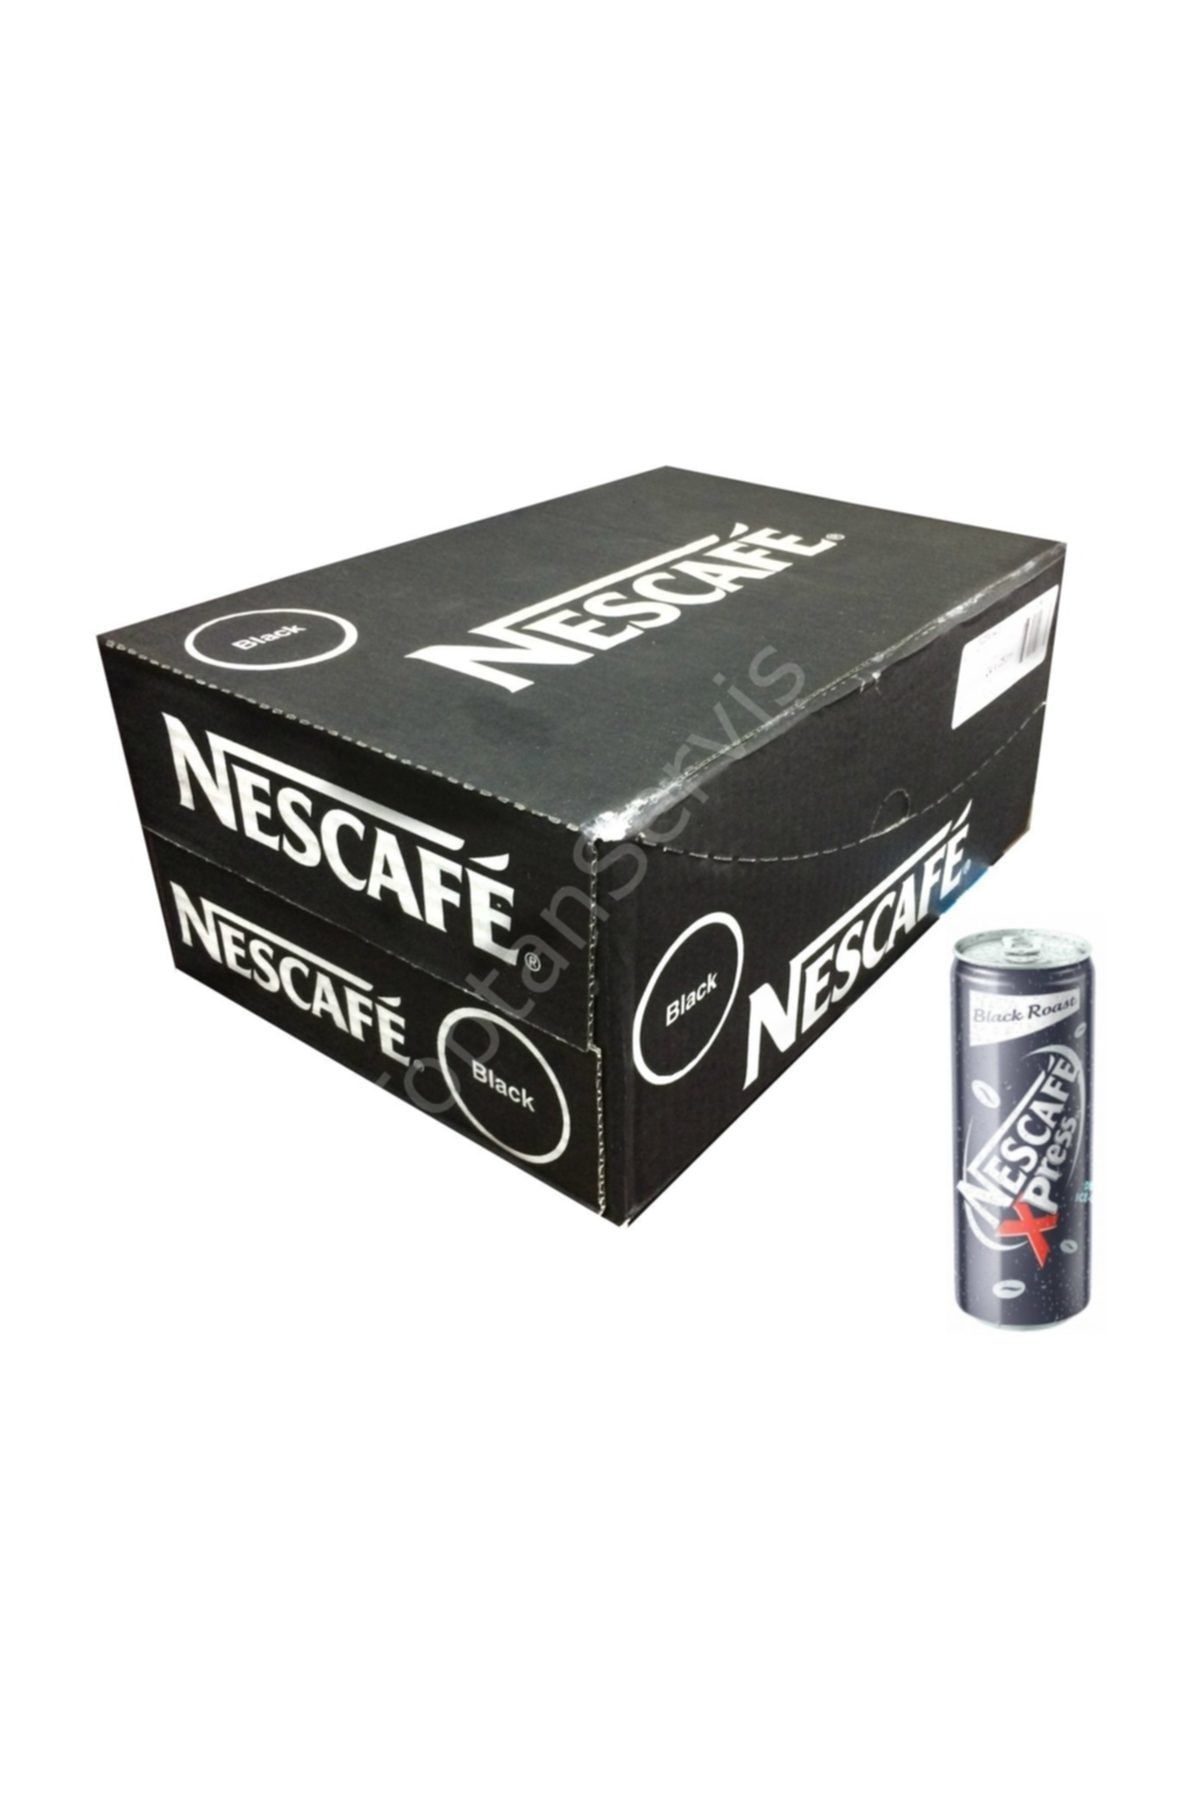 Nestle Nescafe Express 250ml Black 24 Adet